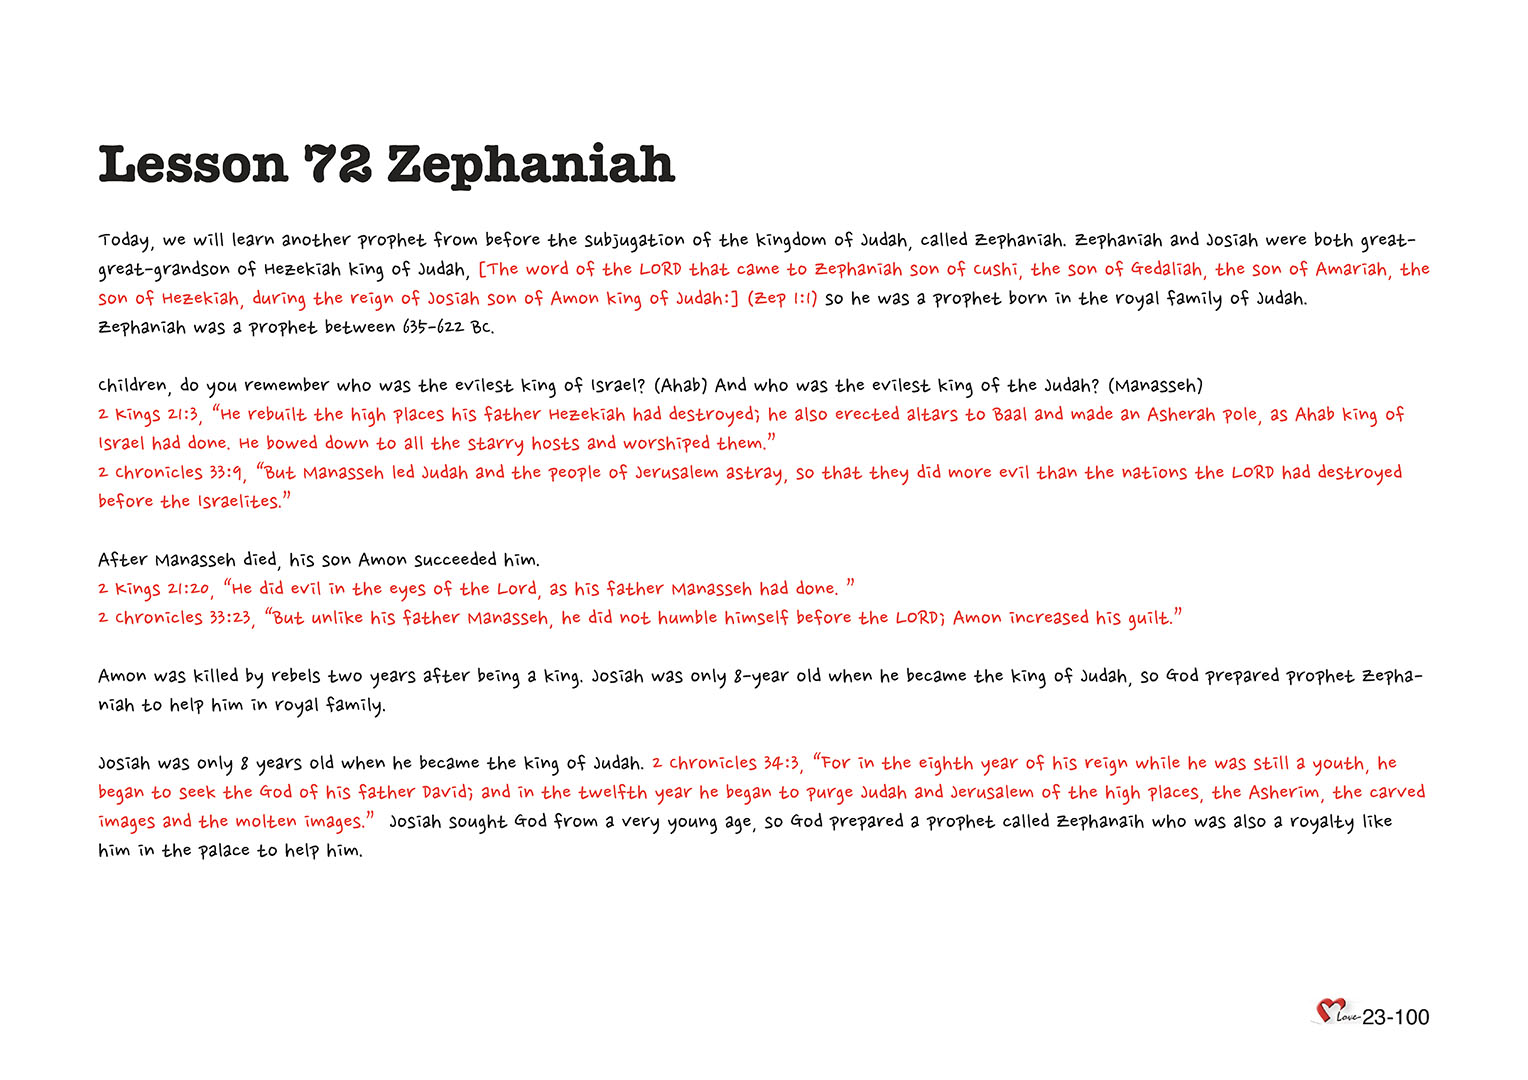 Chapter 23 - Lesson 72 - Zephaniah